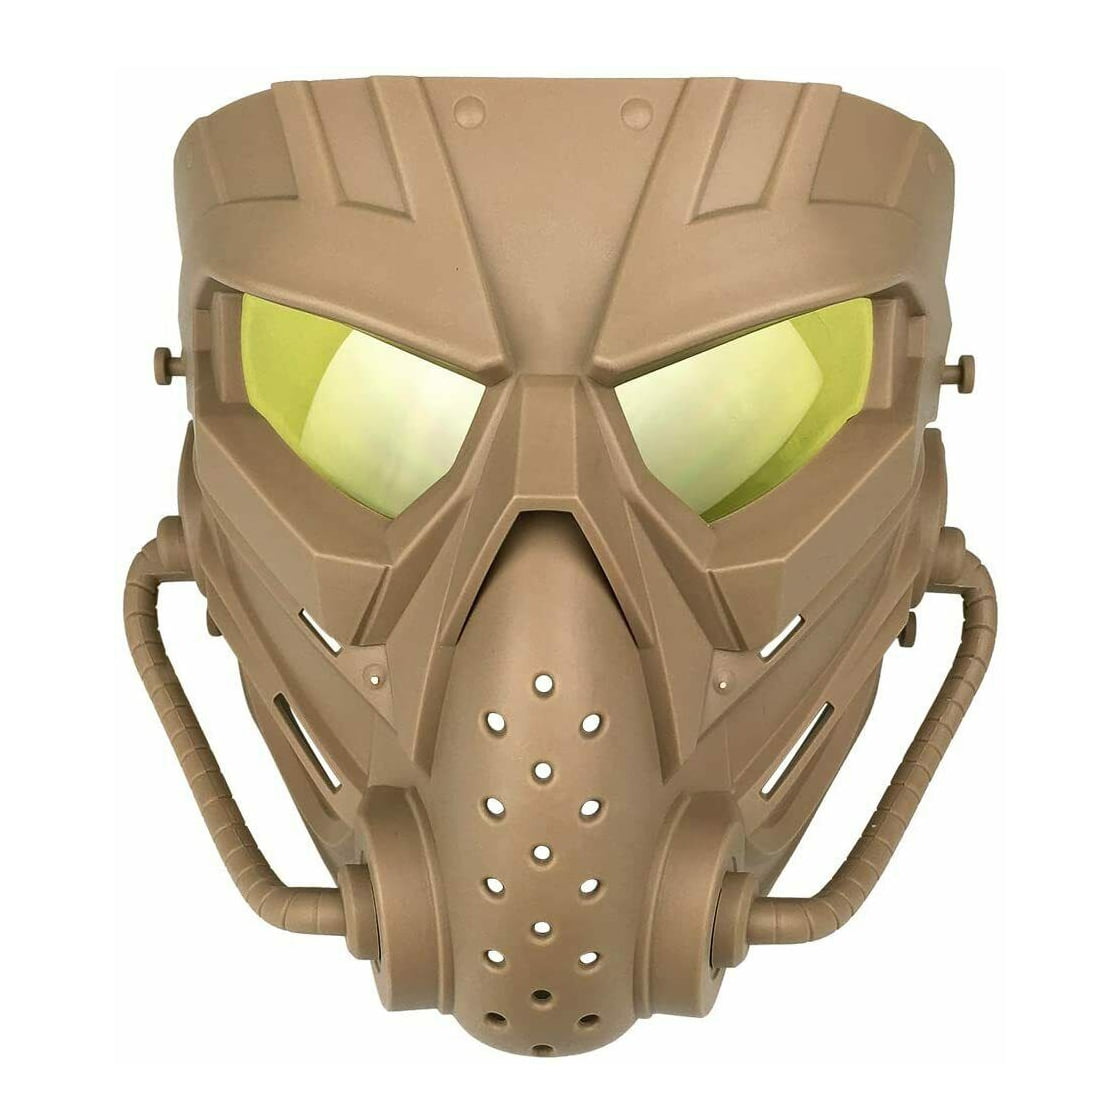 New CS Airsoft Game Mask Tactical Mesh Half Face Mask Outdoor Protective Masks 